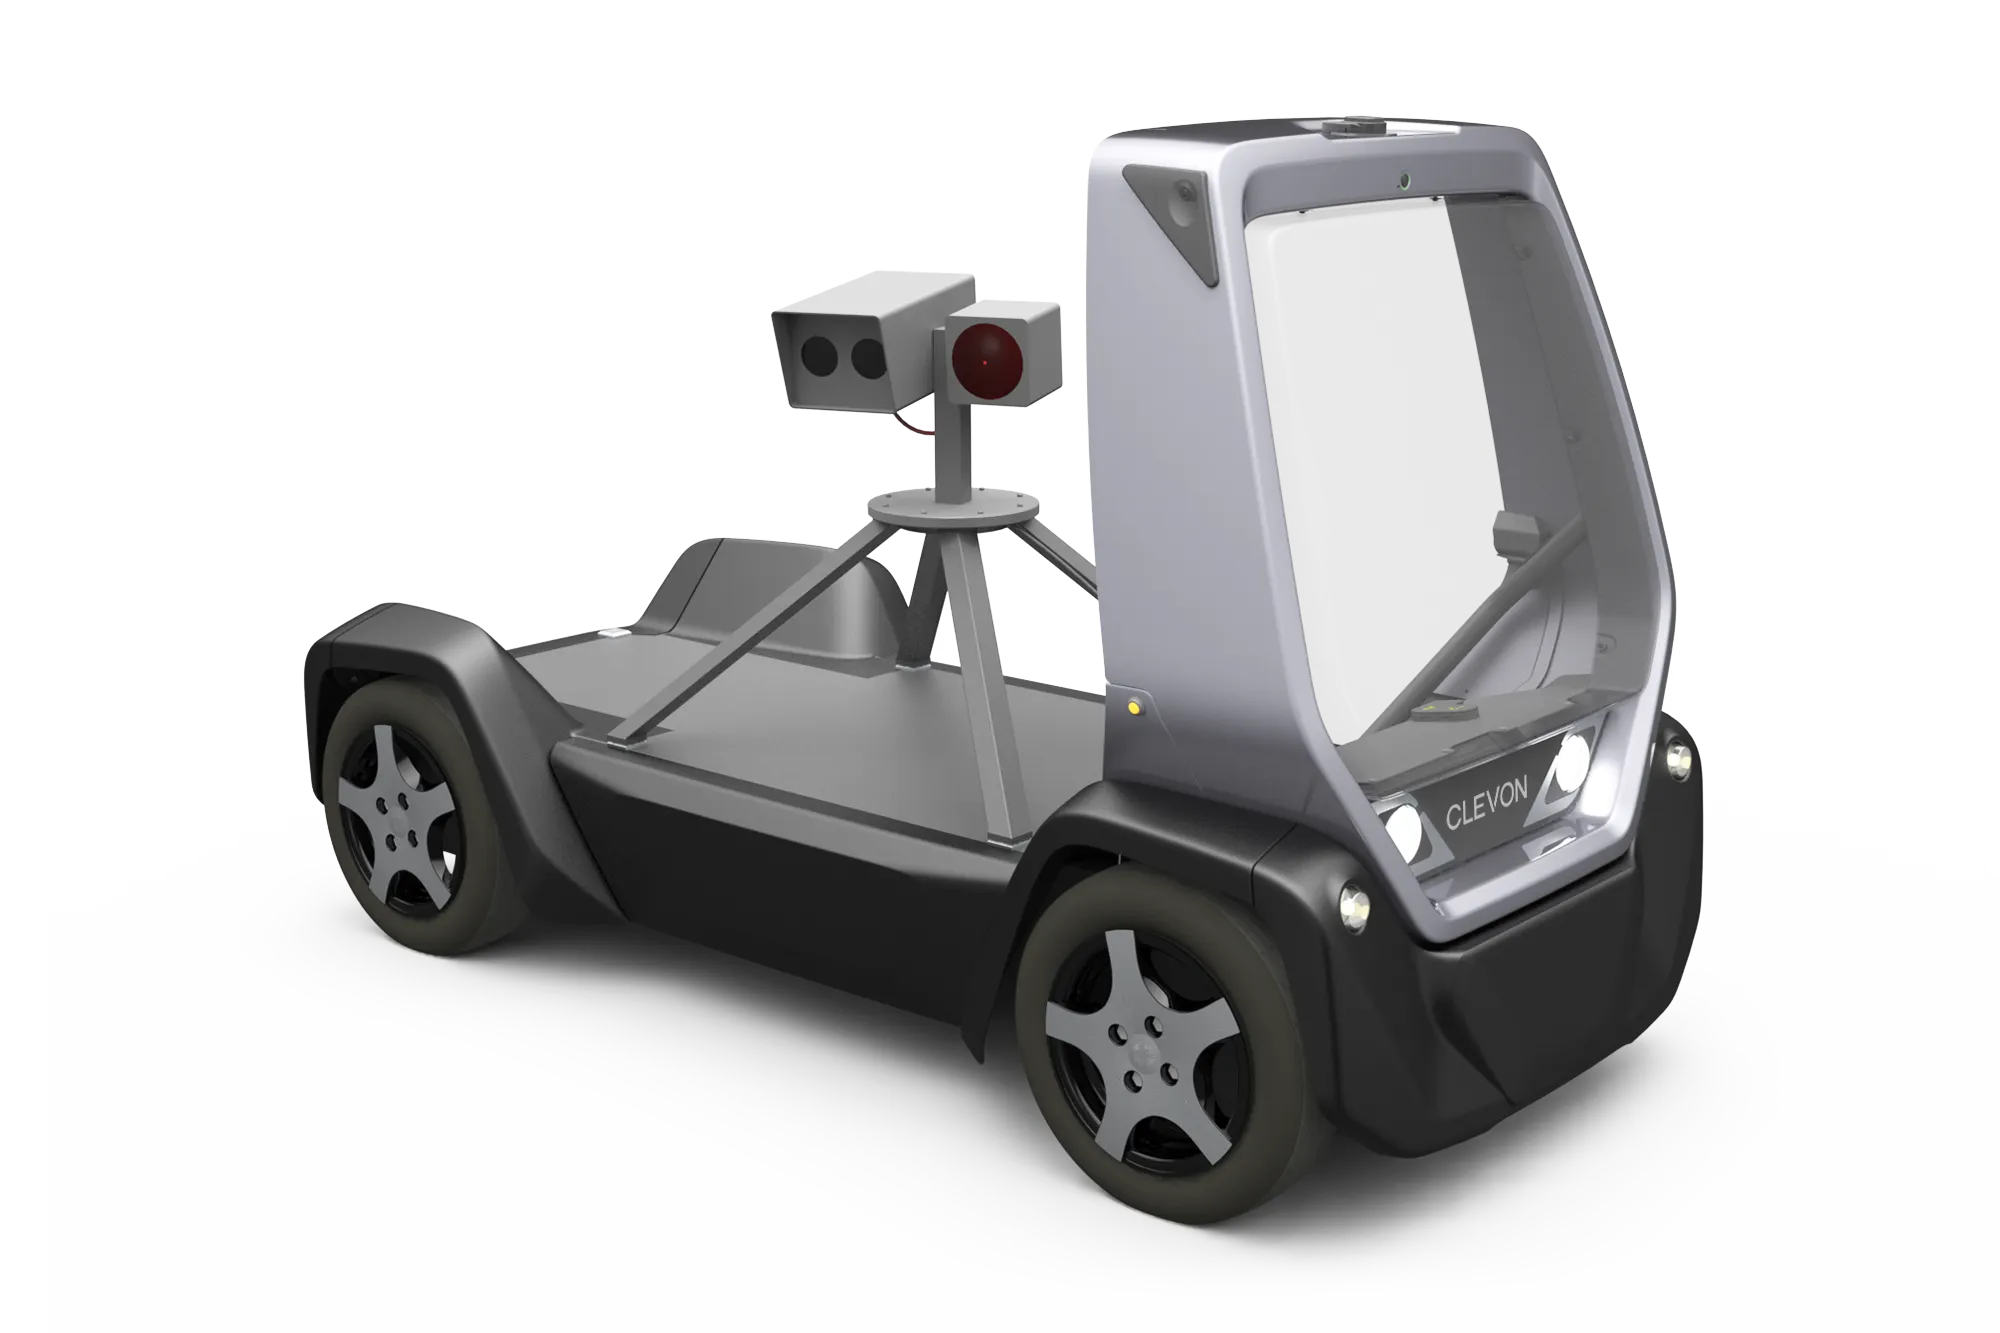 CLEVON 1 autonomous platform vehicle with mobile speed camera